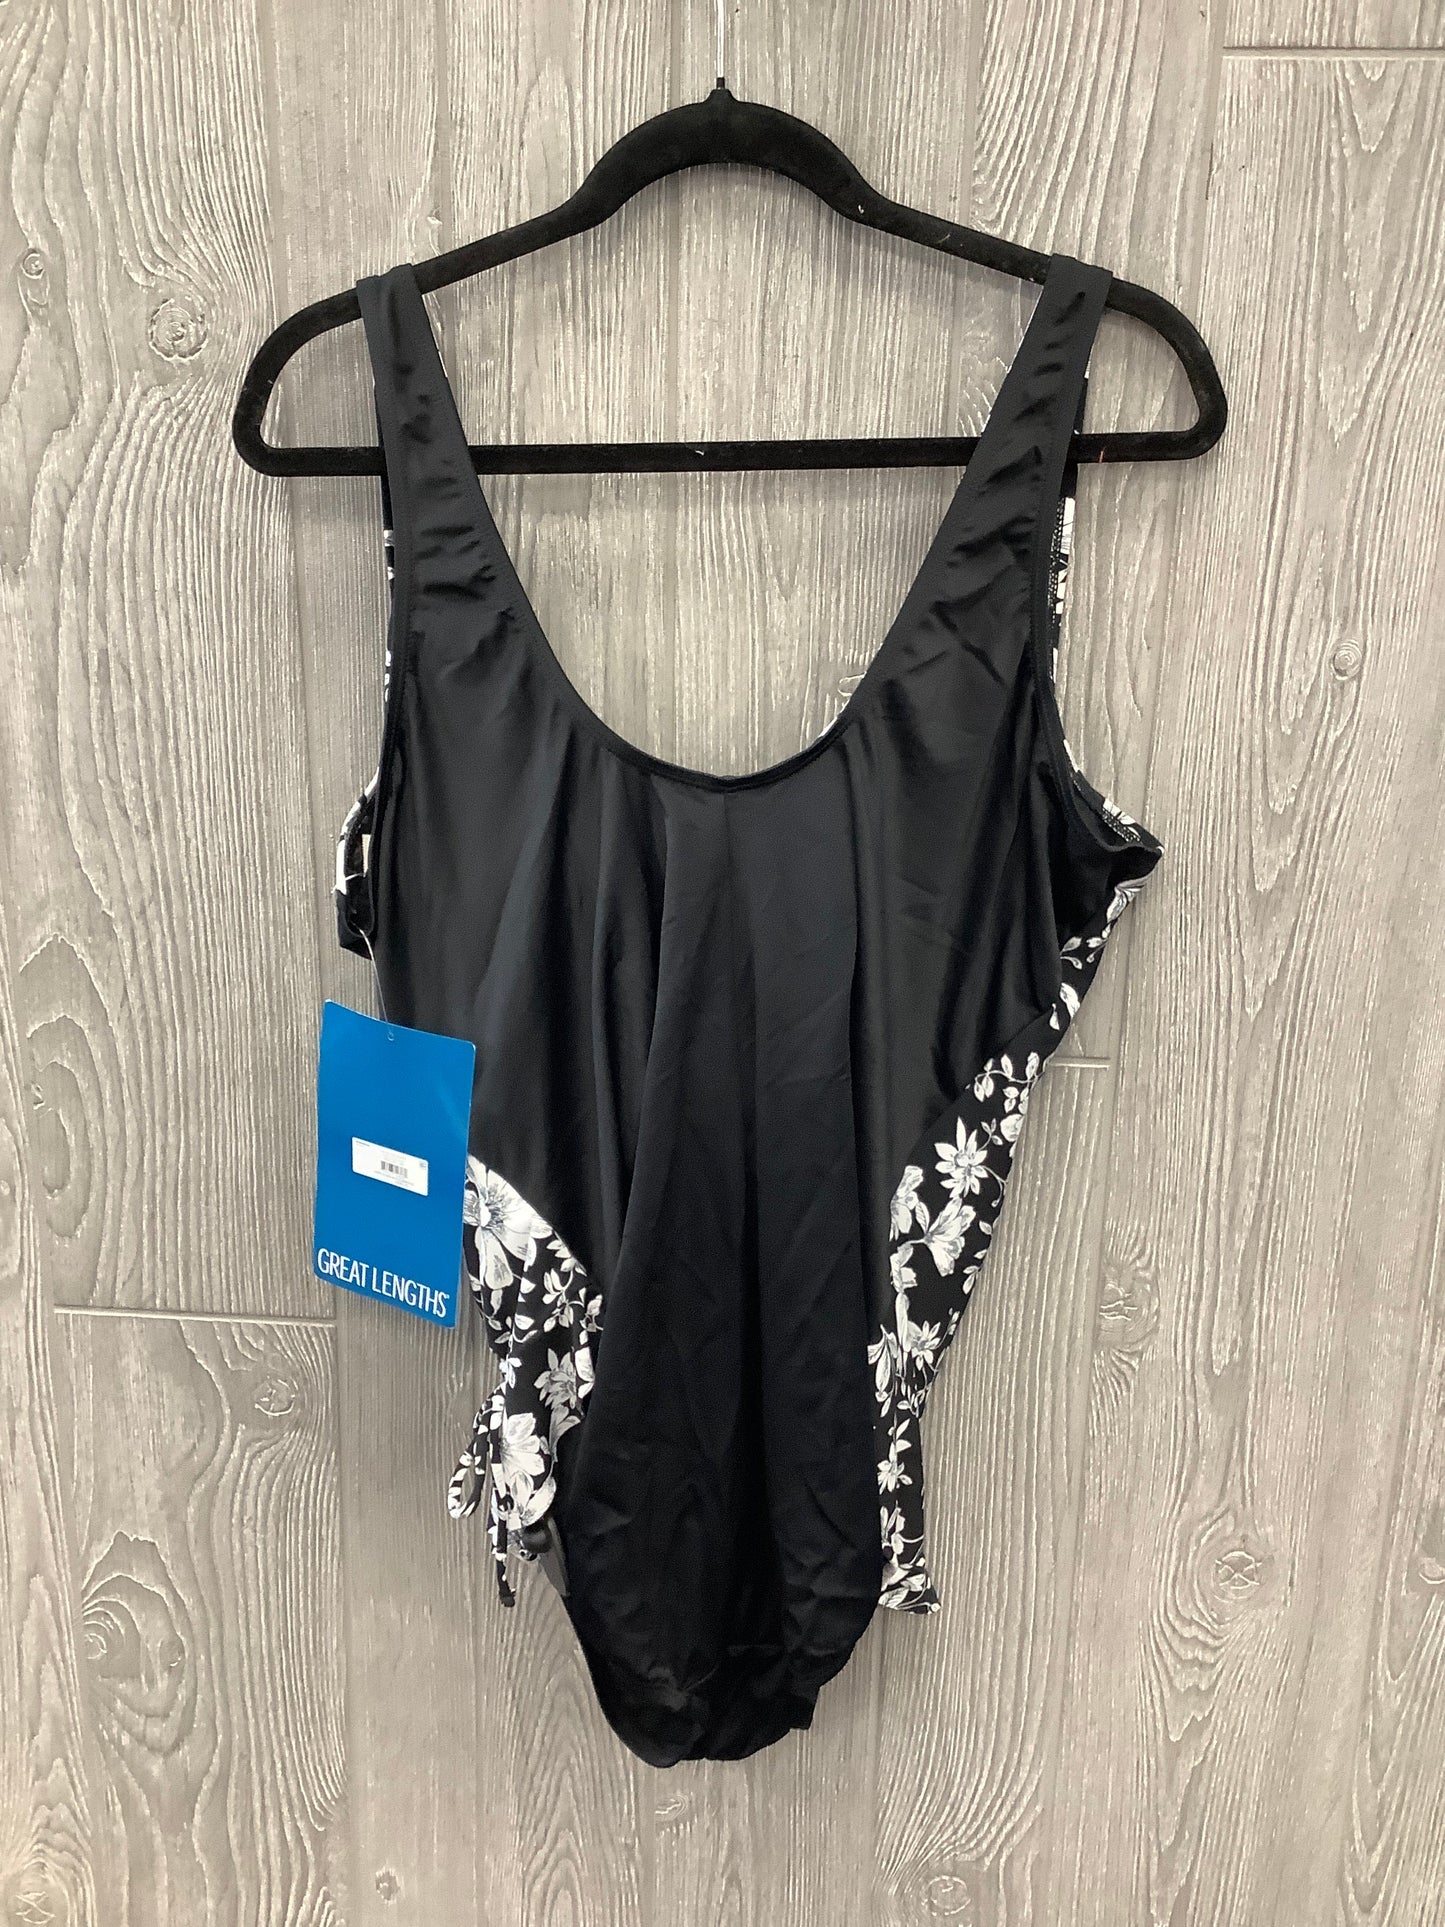 Black Swimsuit Clothes Mentor, Size 3x